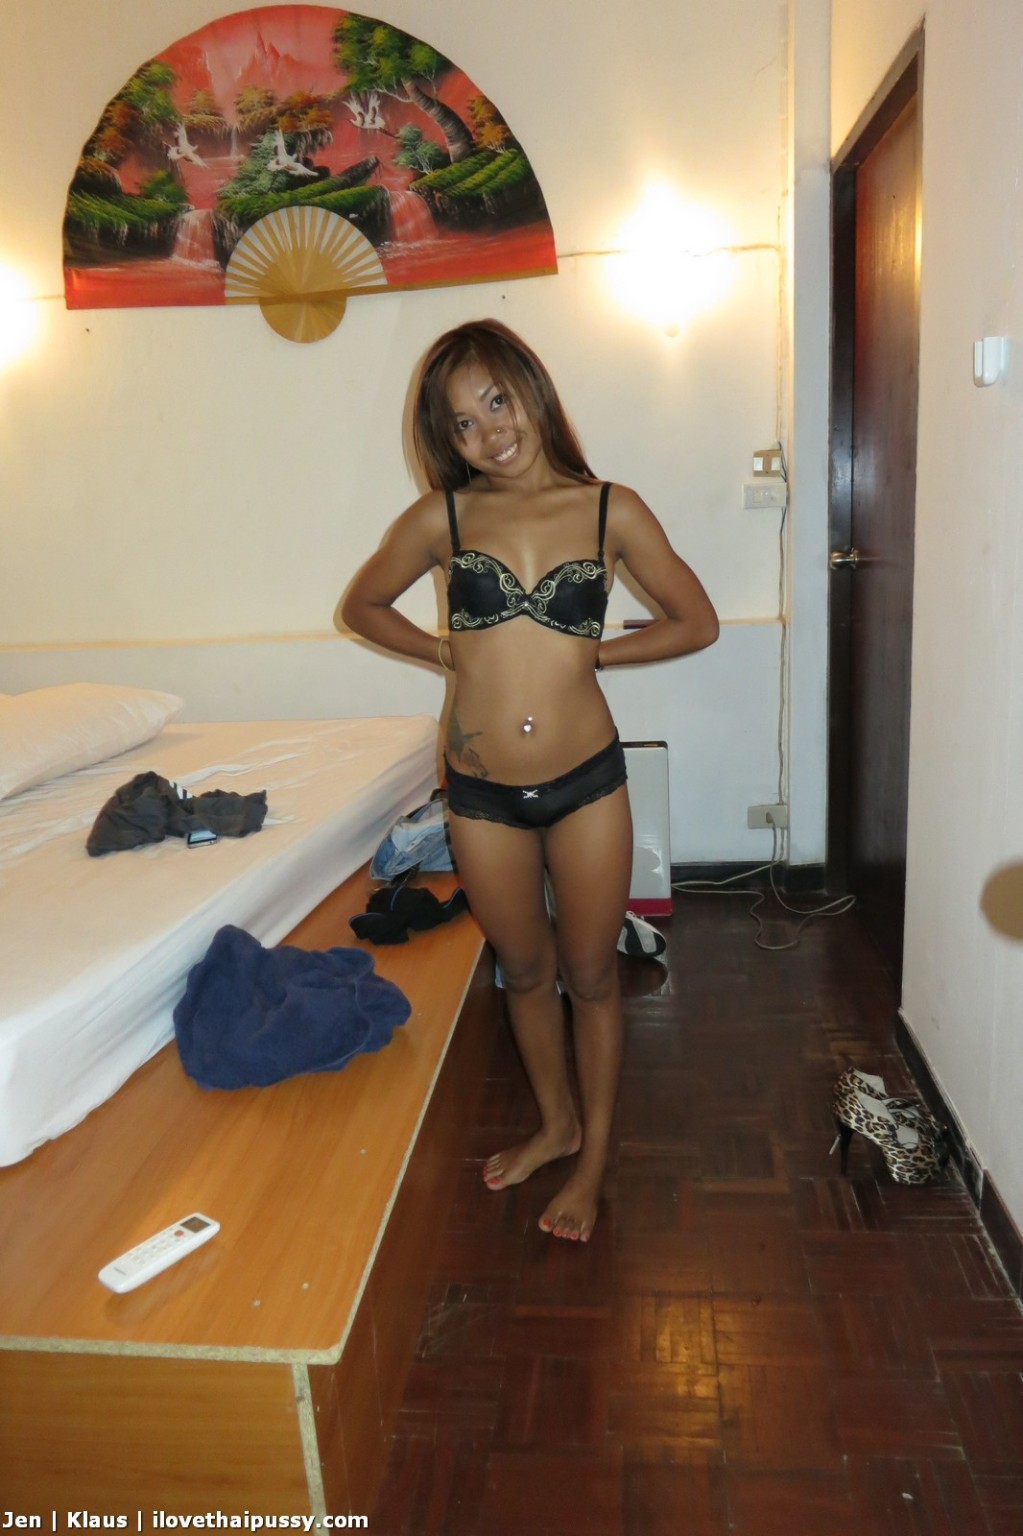 Hot Thai bargirl bareback no condom creampie sex tourist loves asian babe #67671302